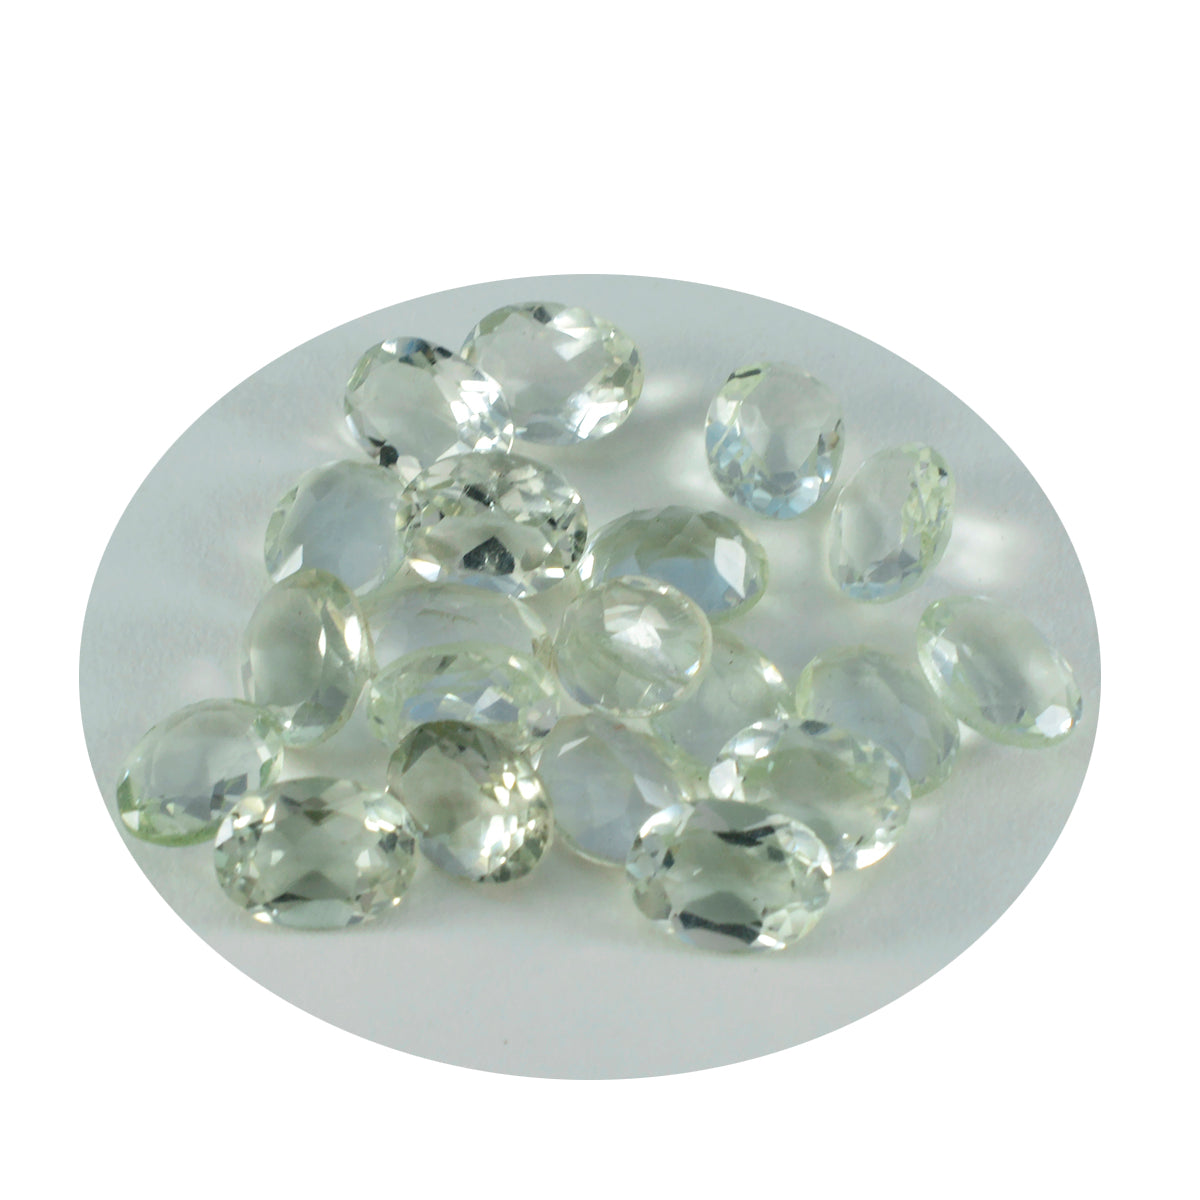 Riyogems 1PC Green Amethyst Faceted 3x5 mm Oval Shape startling Quality Gems